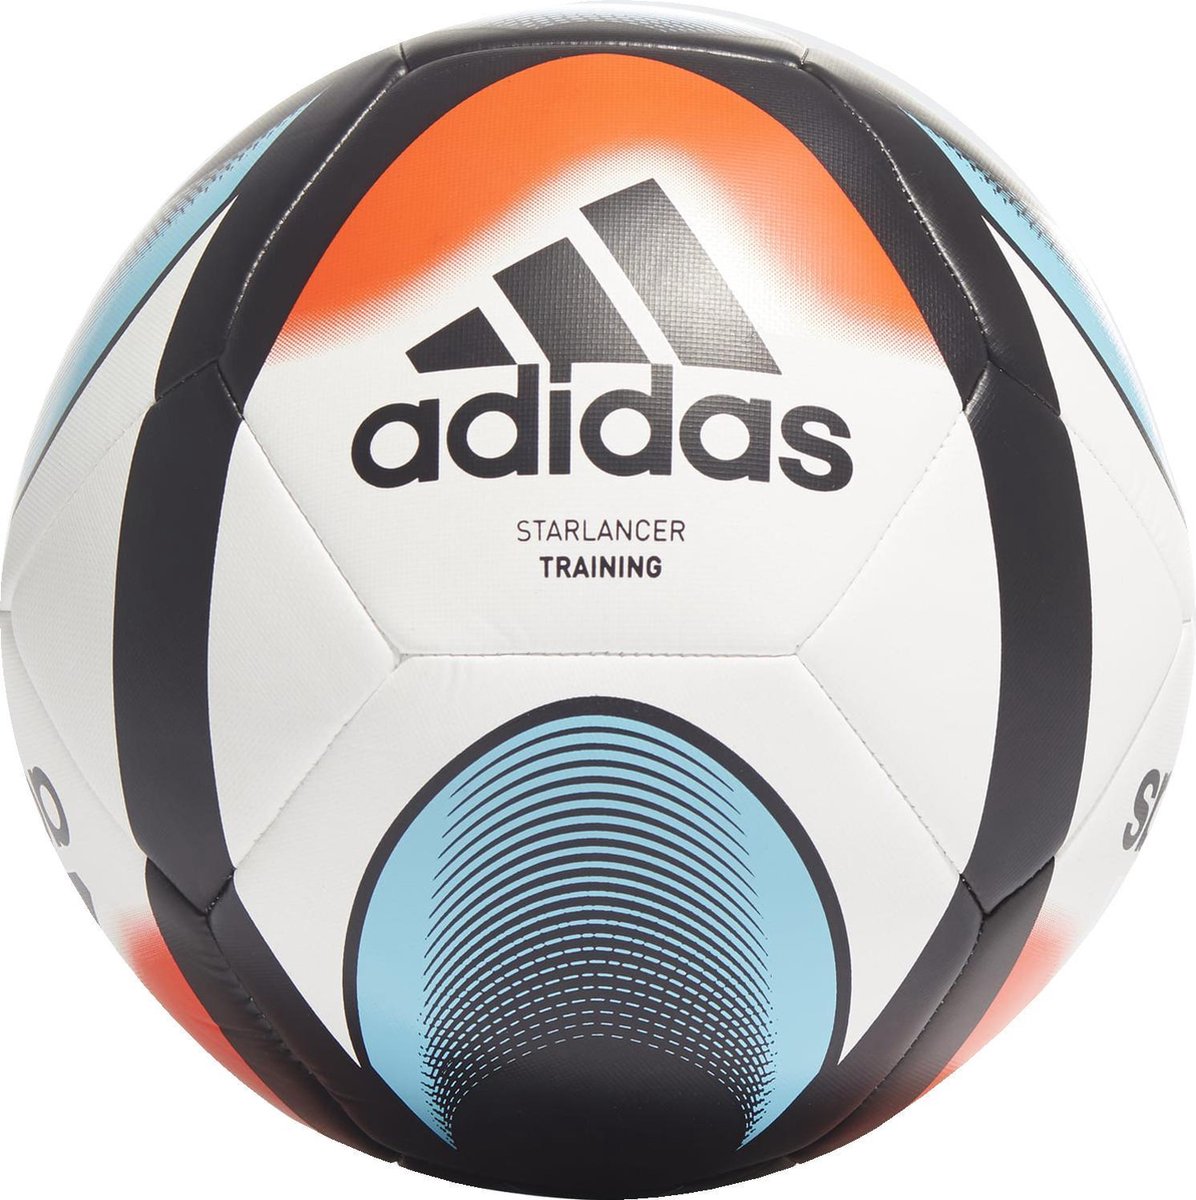 Onrechtvaardig Offer Allerlei soorten Adidas voetbal starlancer Trainingsbal - maat 5 - multi colour | bol.com